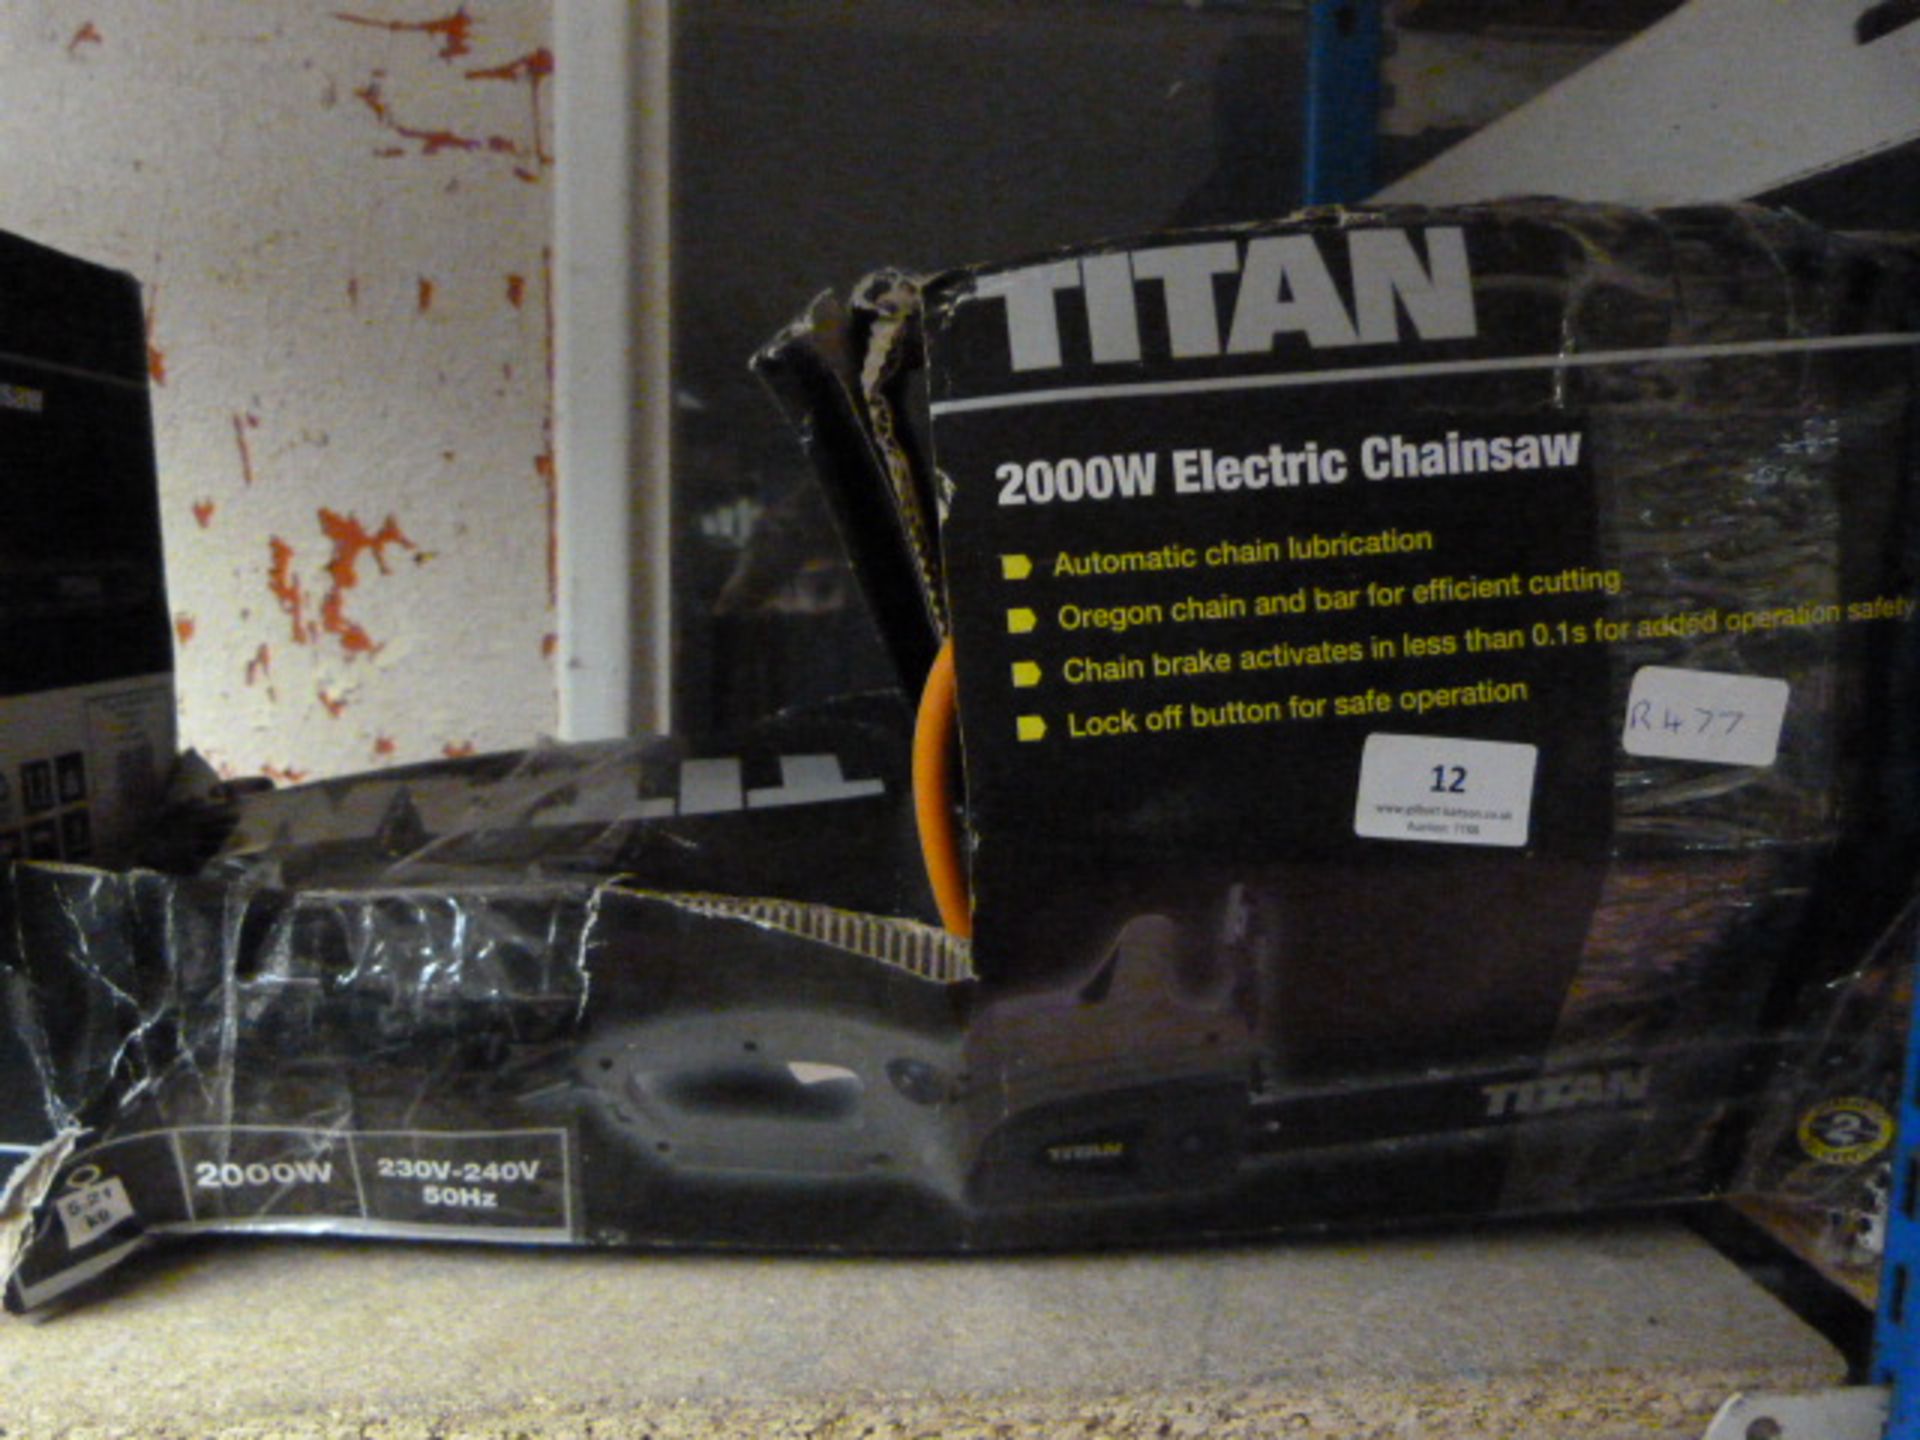 *Titan 2000w Electric Chainsaw